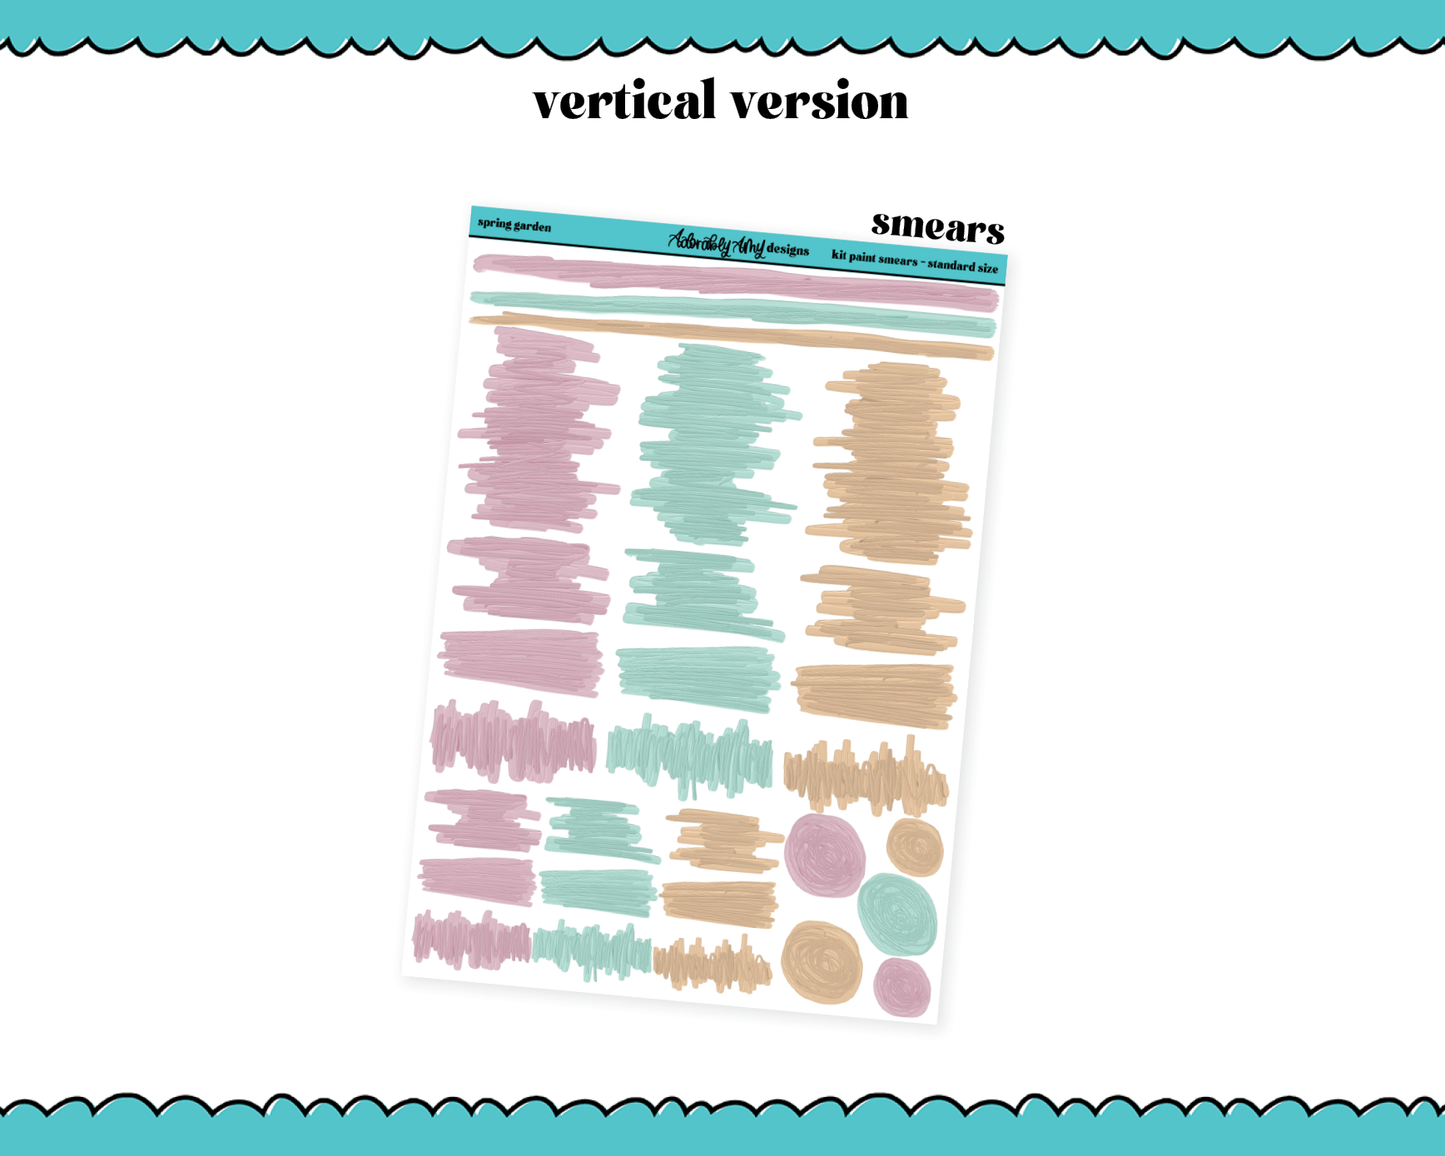 Vertical Spring Garden Planner Sticker Kit for Vertical Standard Size Planners or Inserts